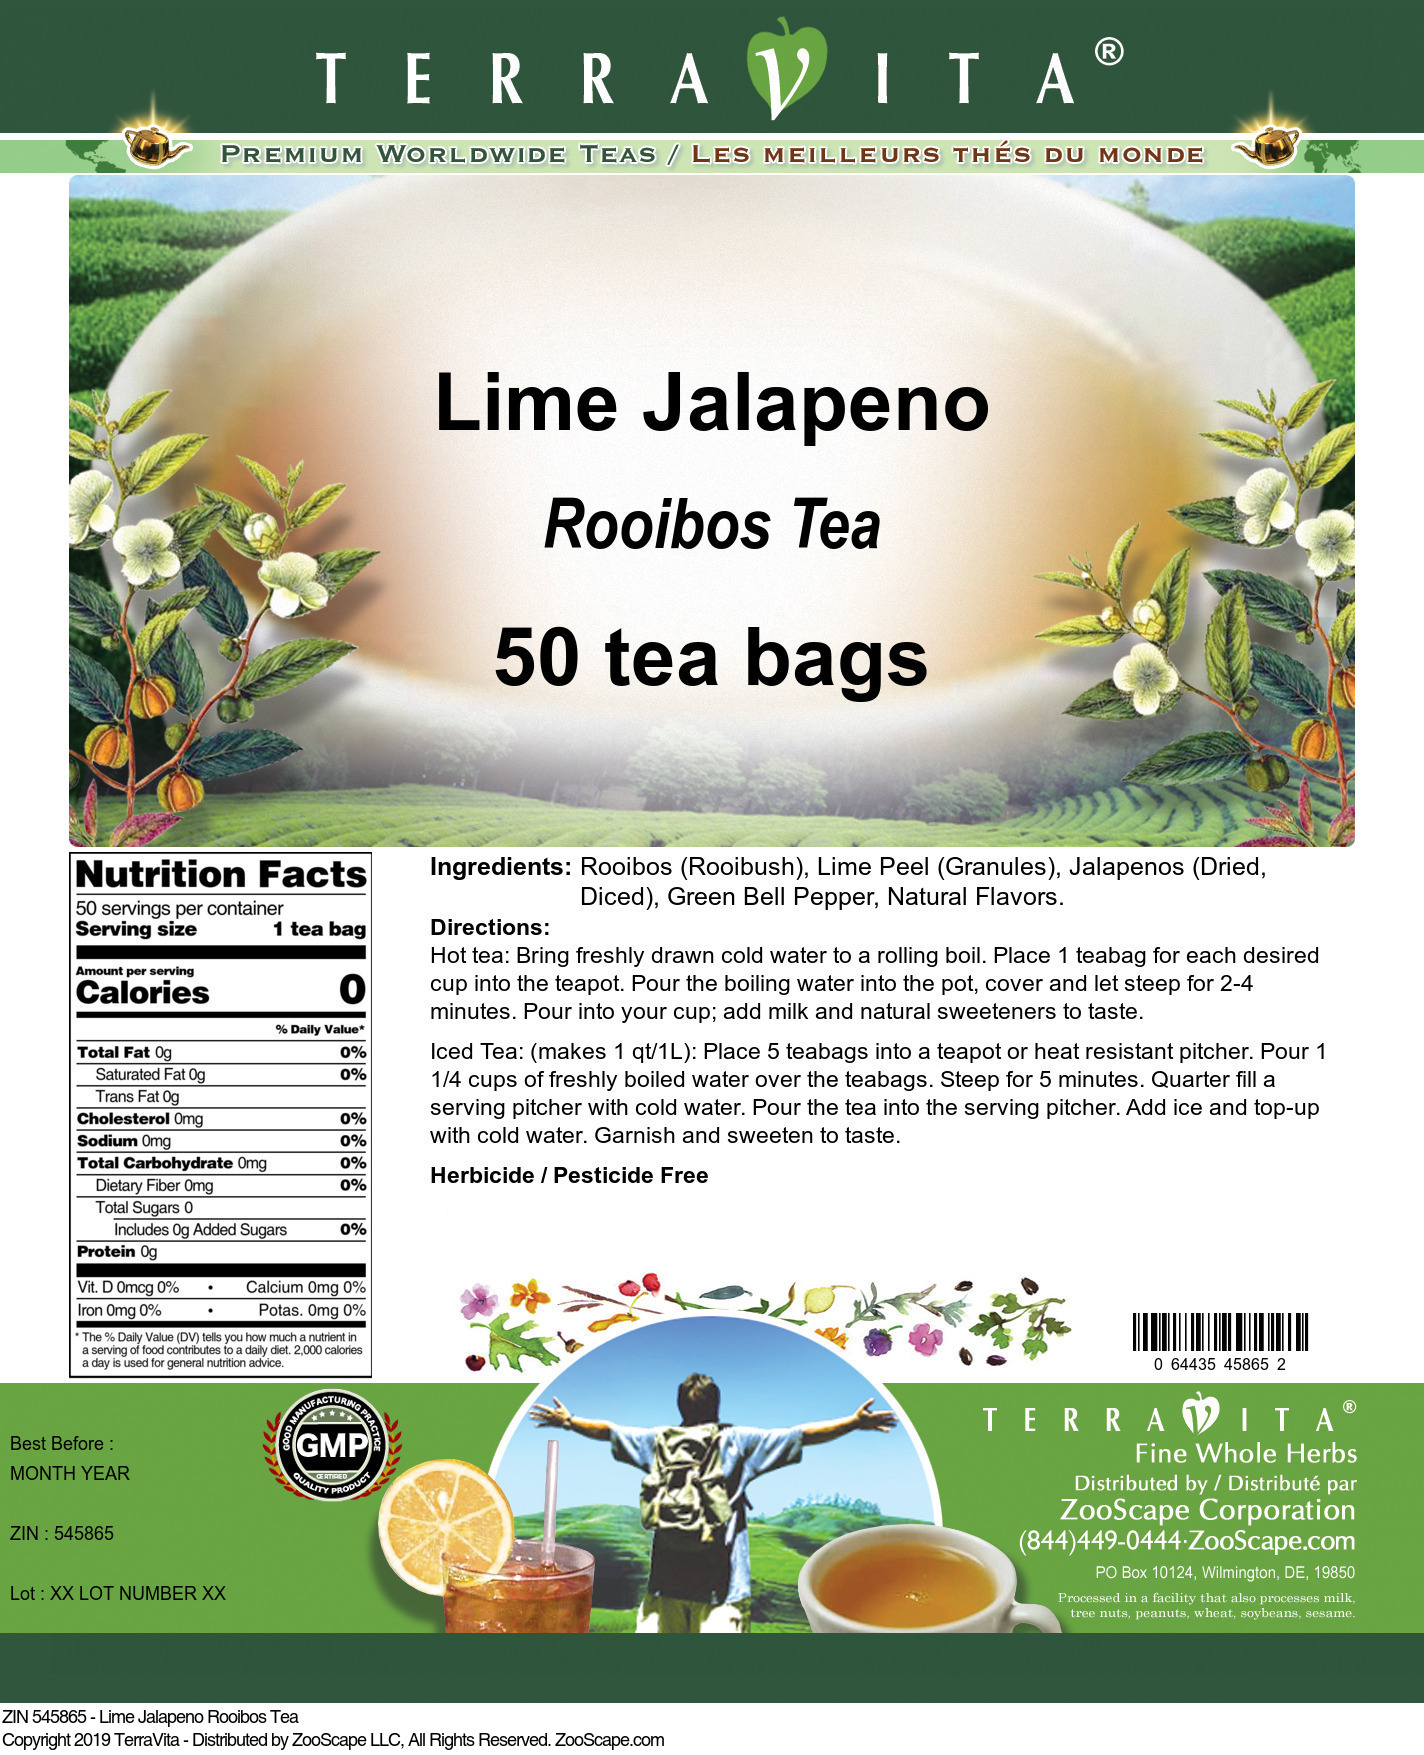 Lime Jalapeno Rooibos Tea - Label